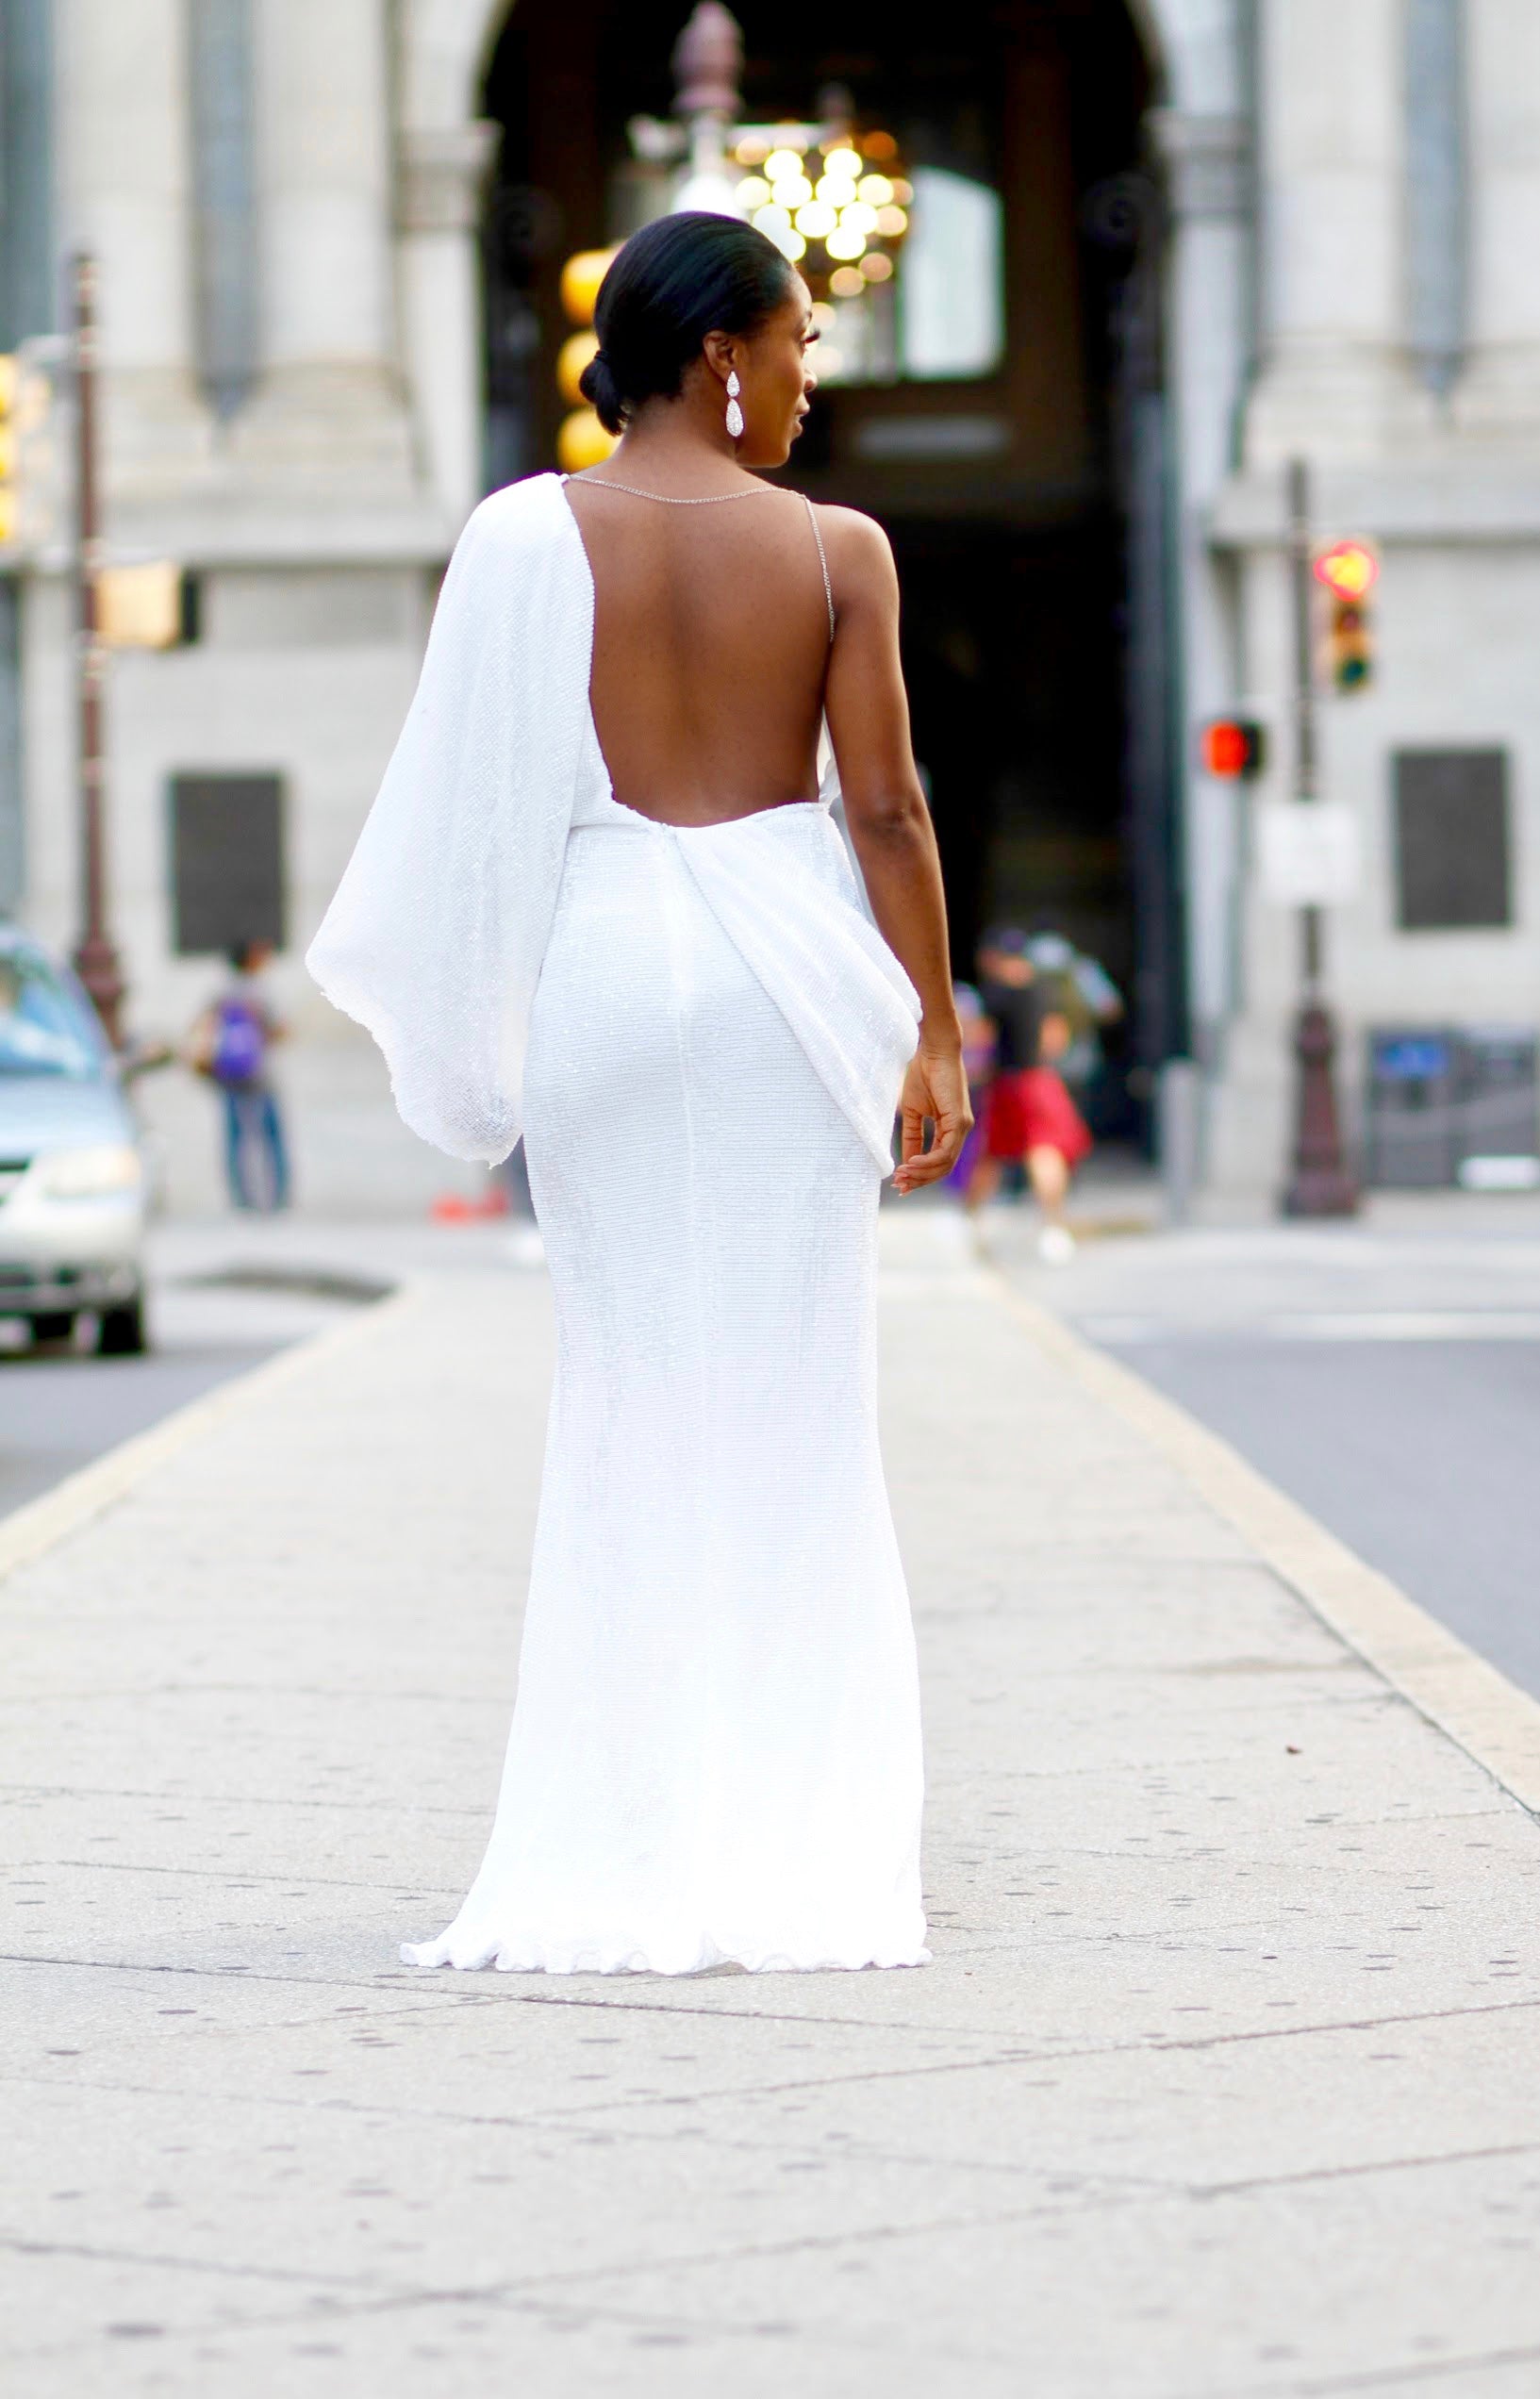 sequin maxi dress white